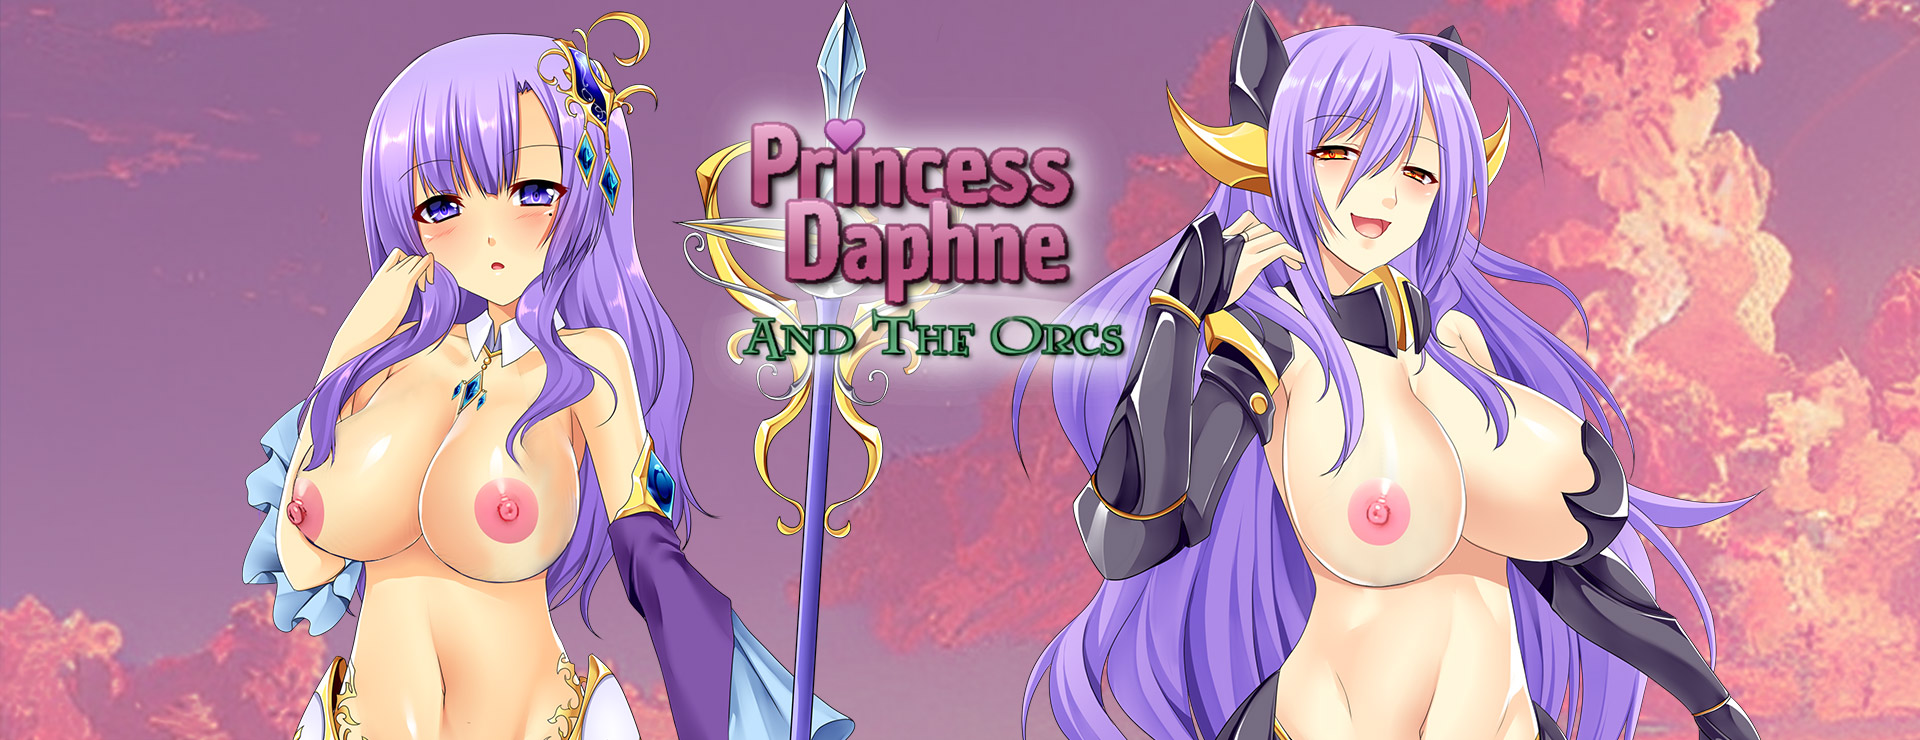 Princess Daphne and the Orcs - RPG Gra